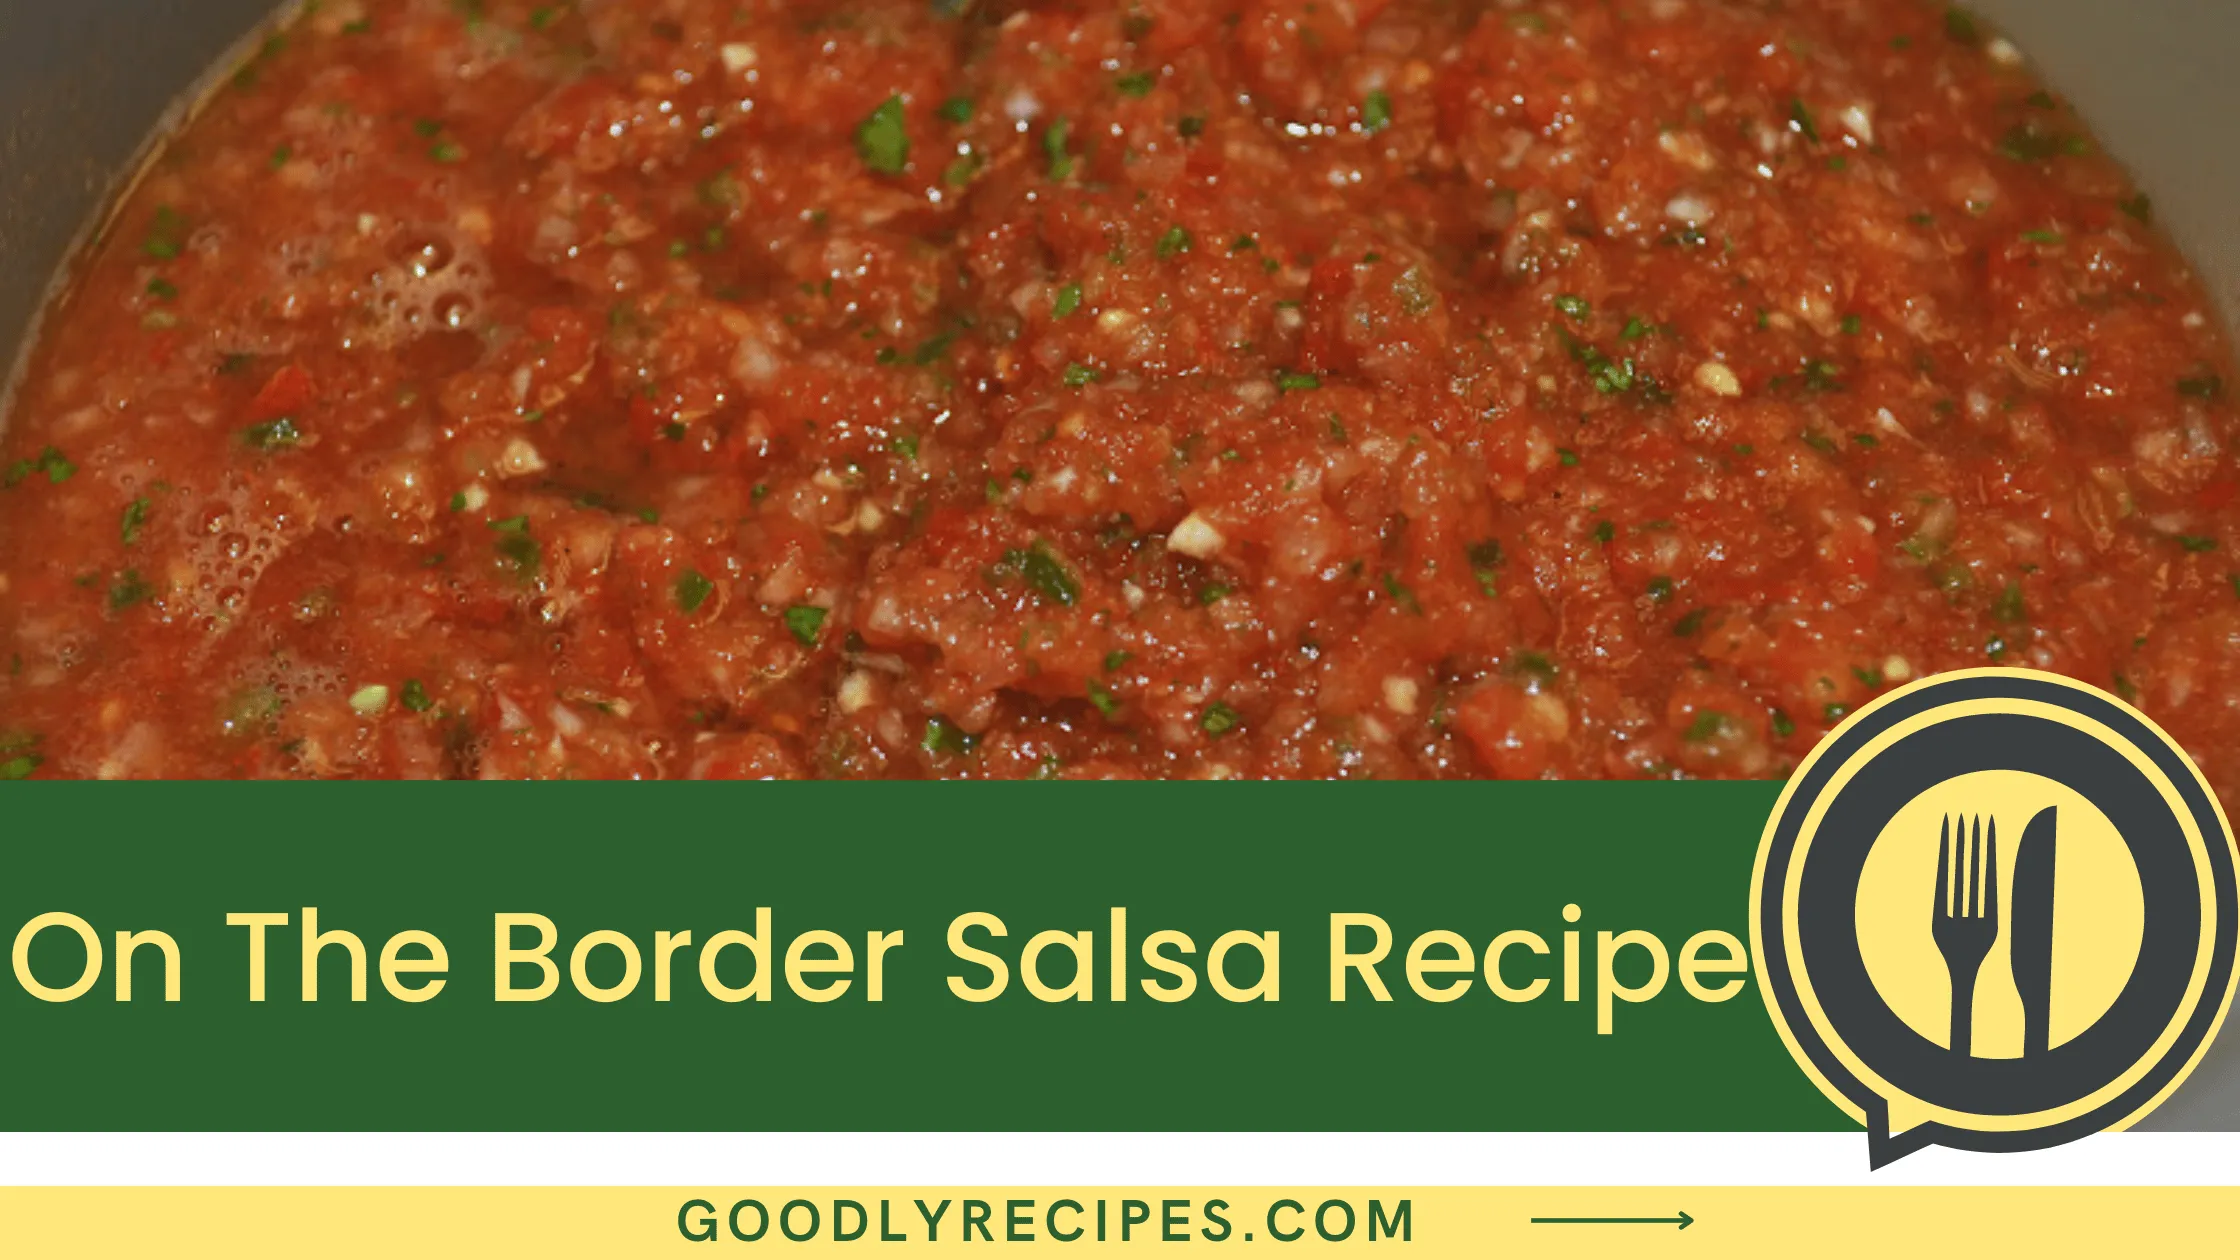 On The Border Salsa Recipe